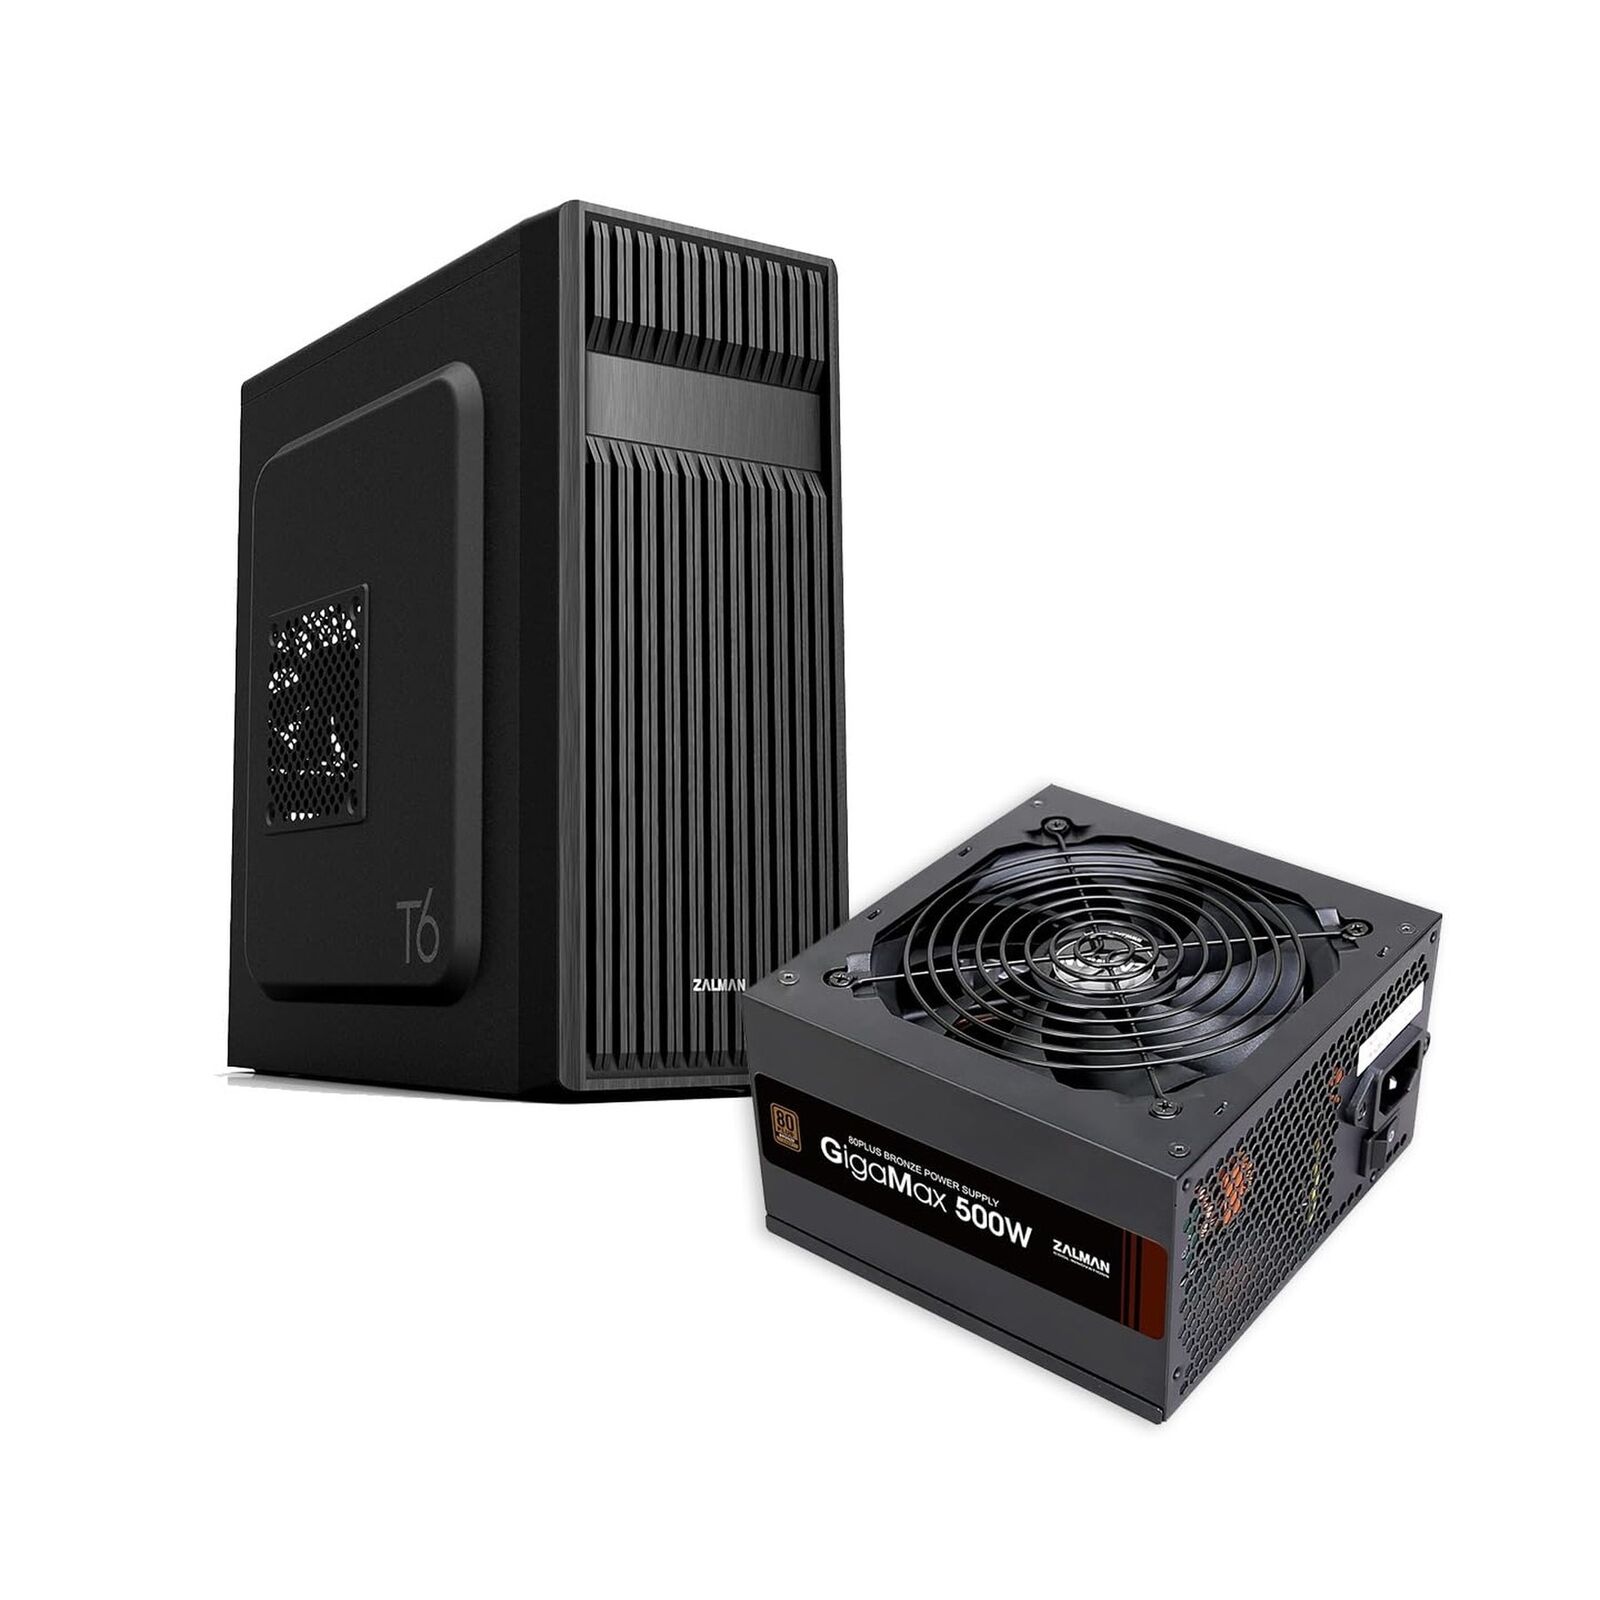 Zalman T6 ATX Mid Tower PC Case + GigaMax 500W 80+ Bronze Power Supply ATX PSU